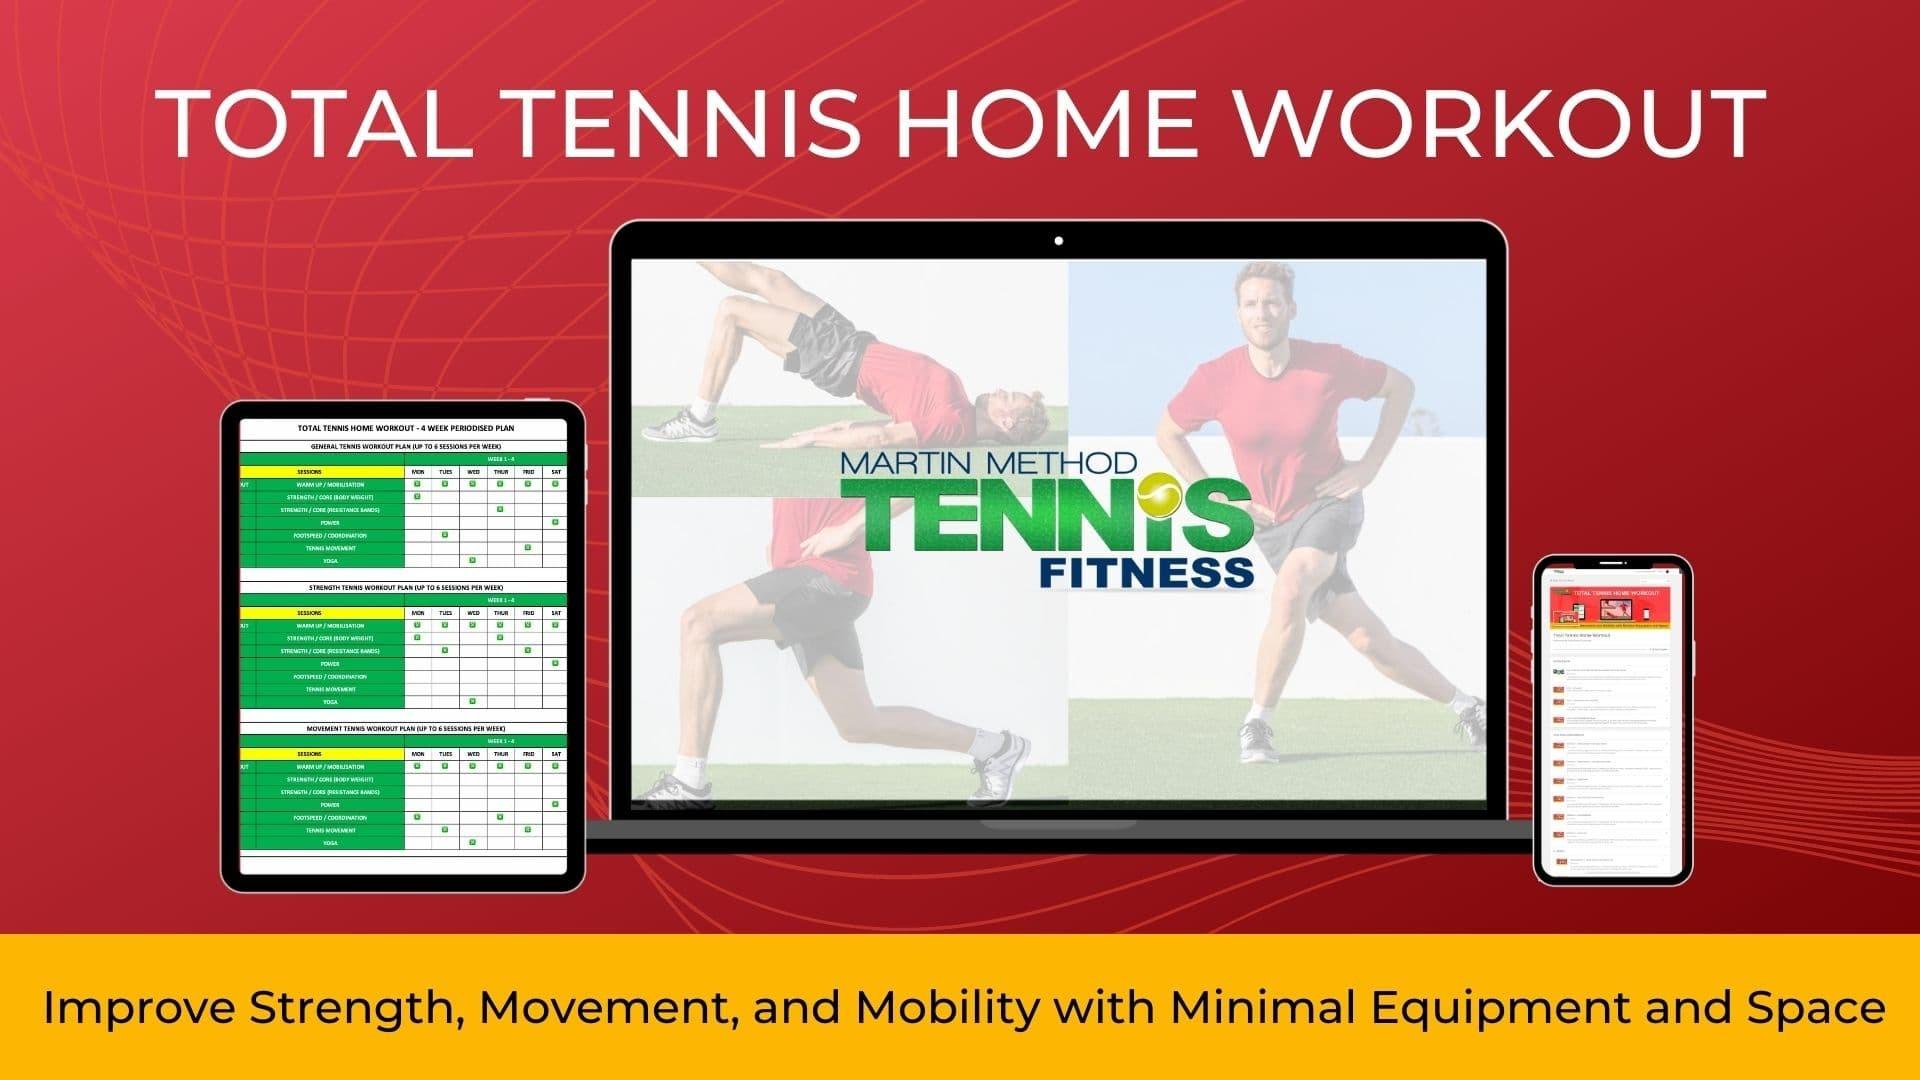 Tennisfitness.com Total Tennis Home Workout